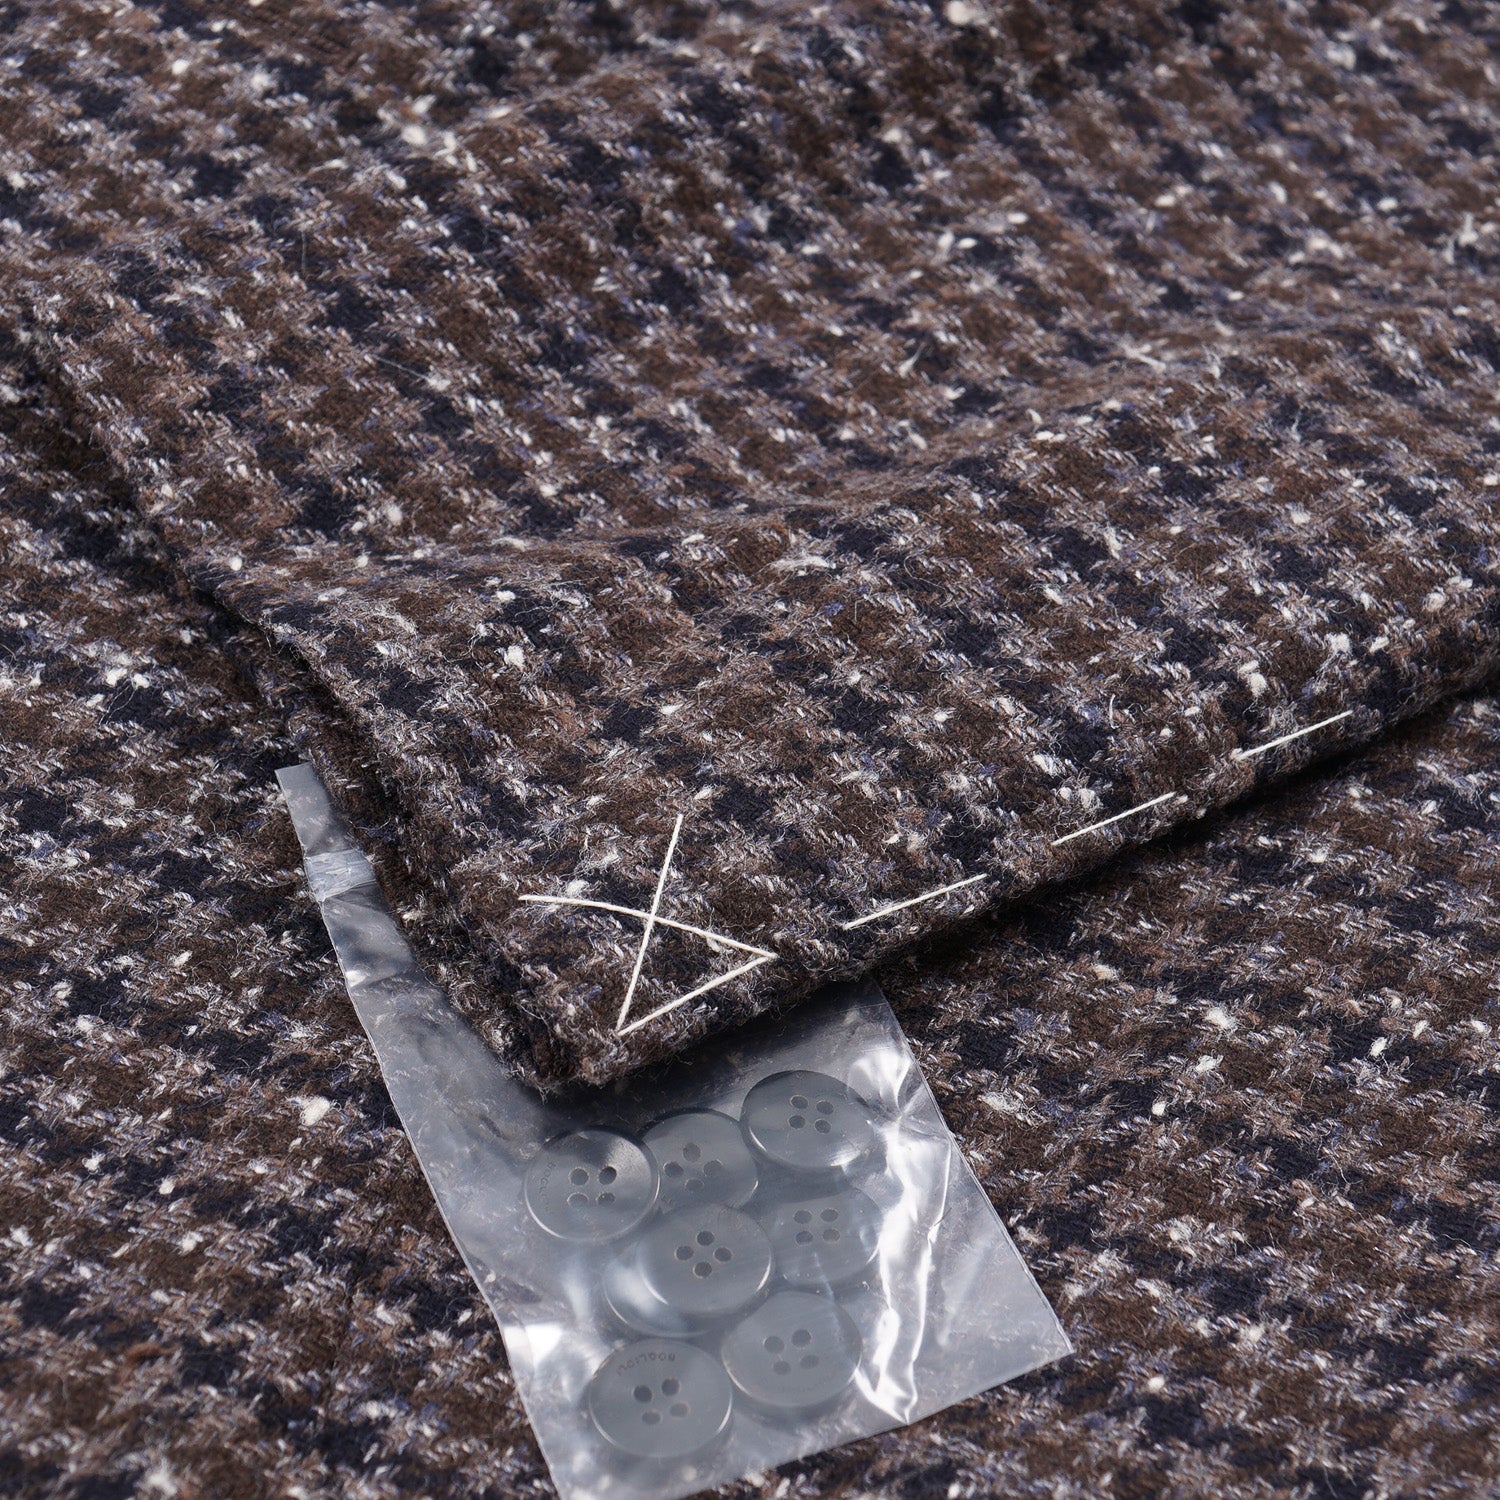 Boglioli Wool-Cashmere-Silk K-Jacket - Top Shelf Apparel